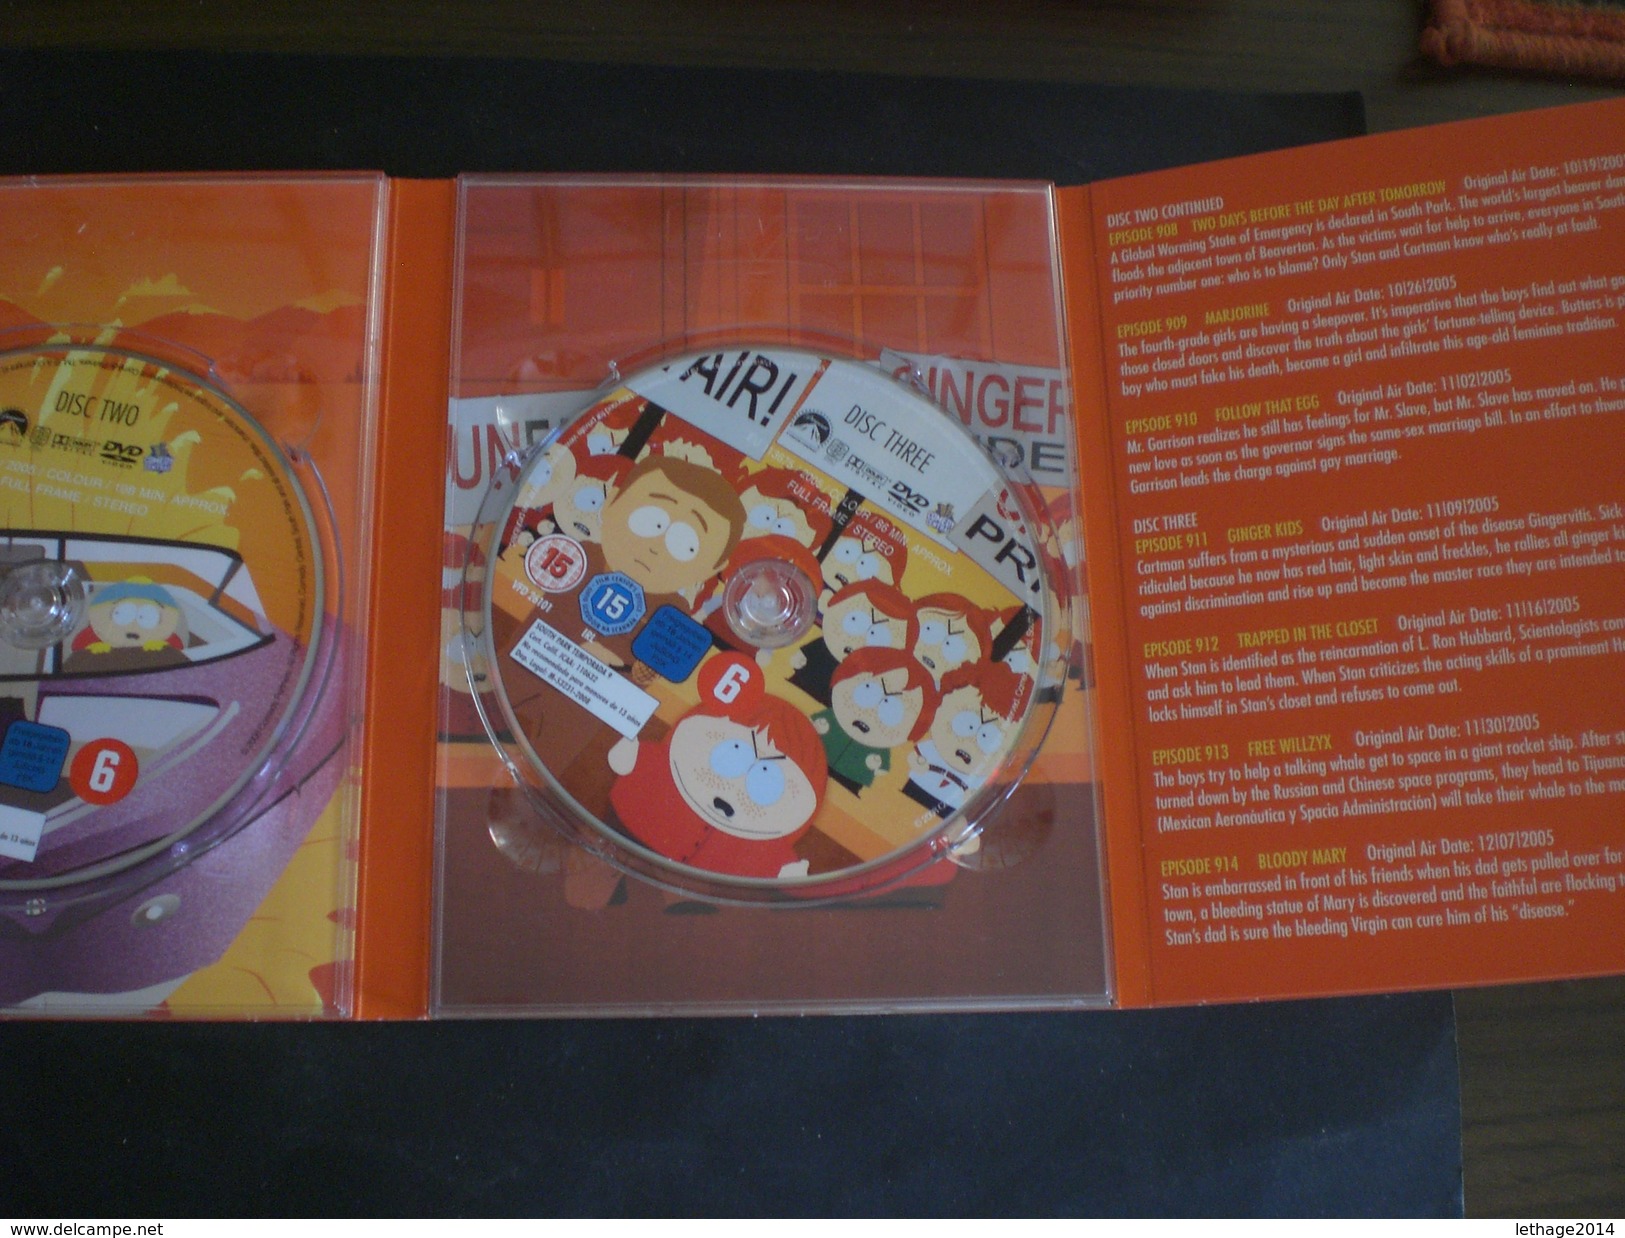 CARTONI ANIMATI South Park: The Complete Ninth Season [3 Discs] [DVD] - Cartoons